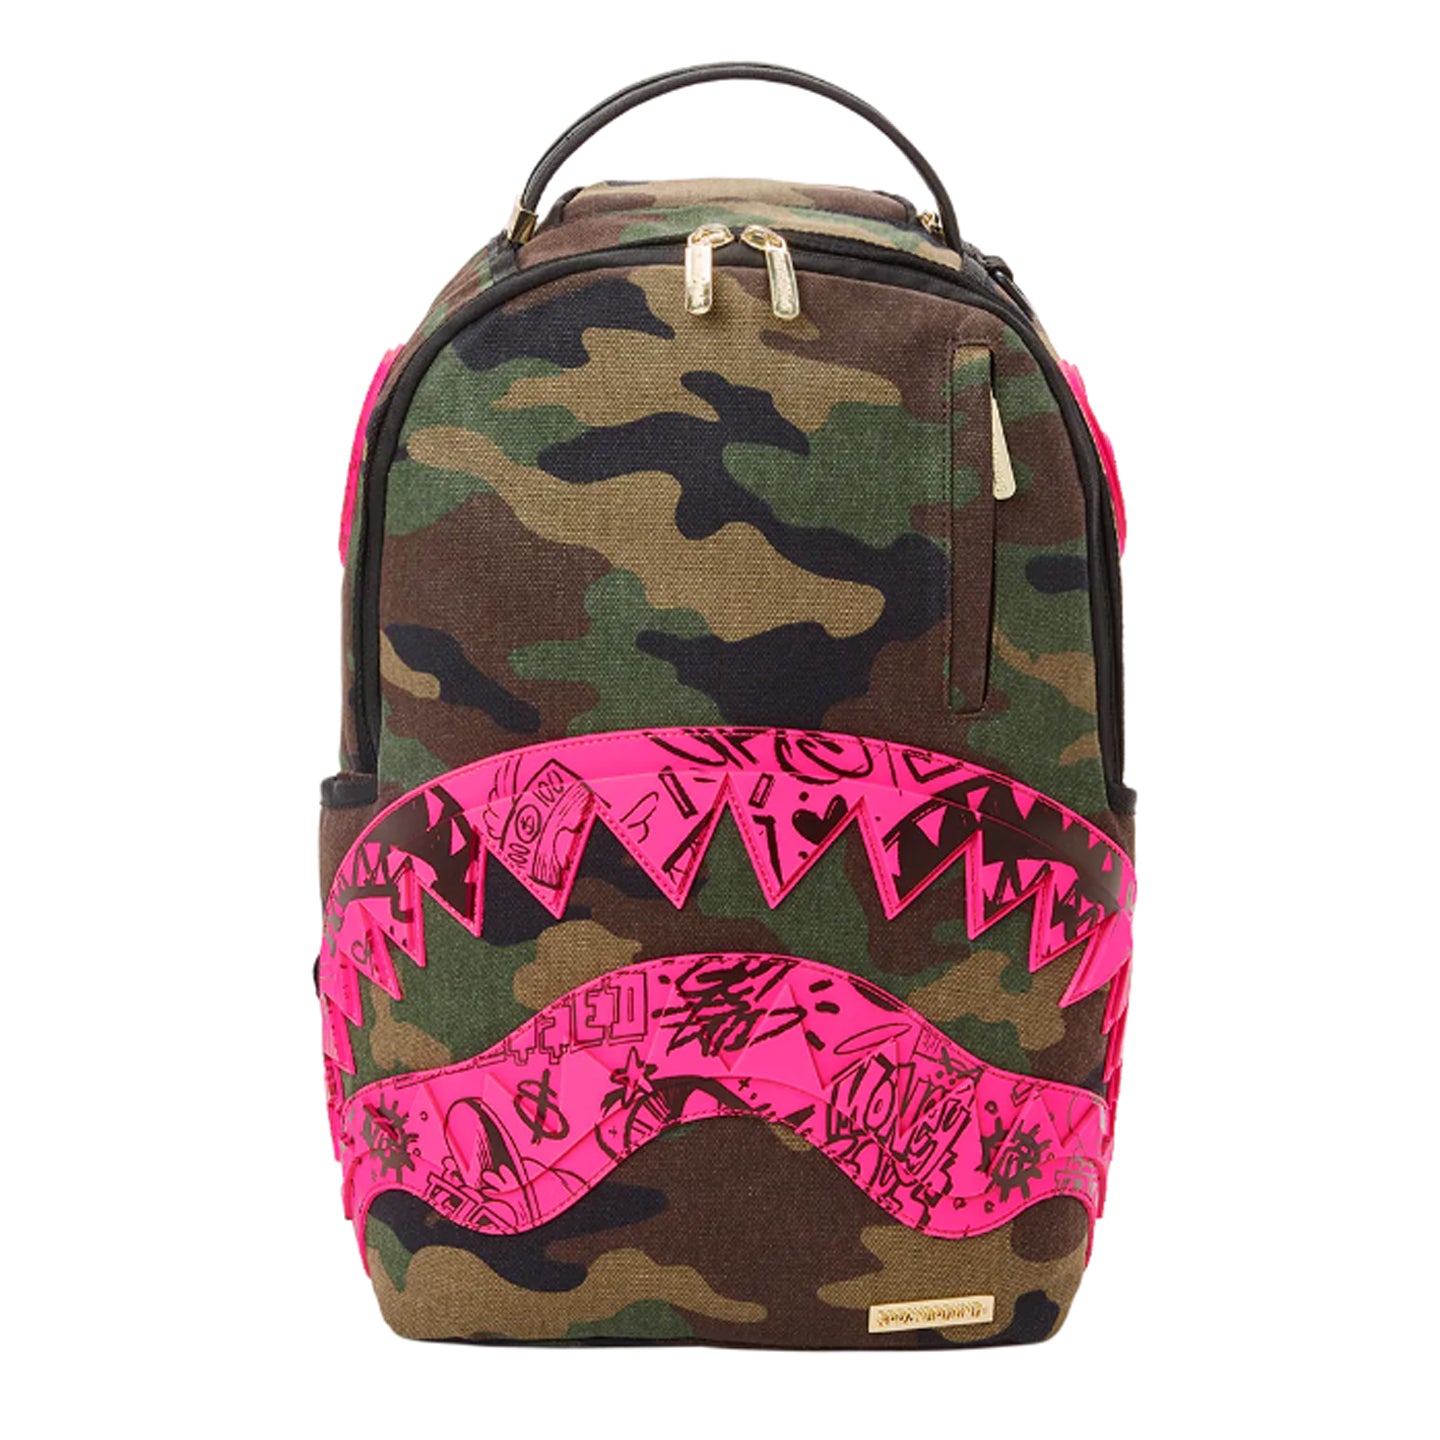 SPRAYGROUND BUSHWICK BACKPACK - Pink "VIVA LA SPRAYGROUND" Bag - Limited  Edition